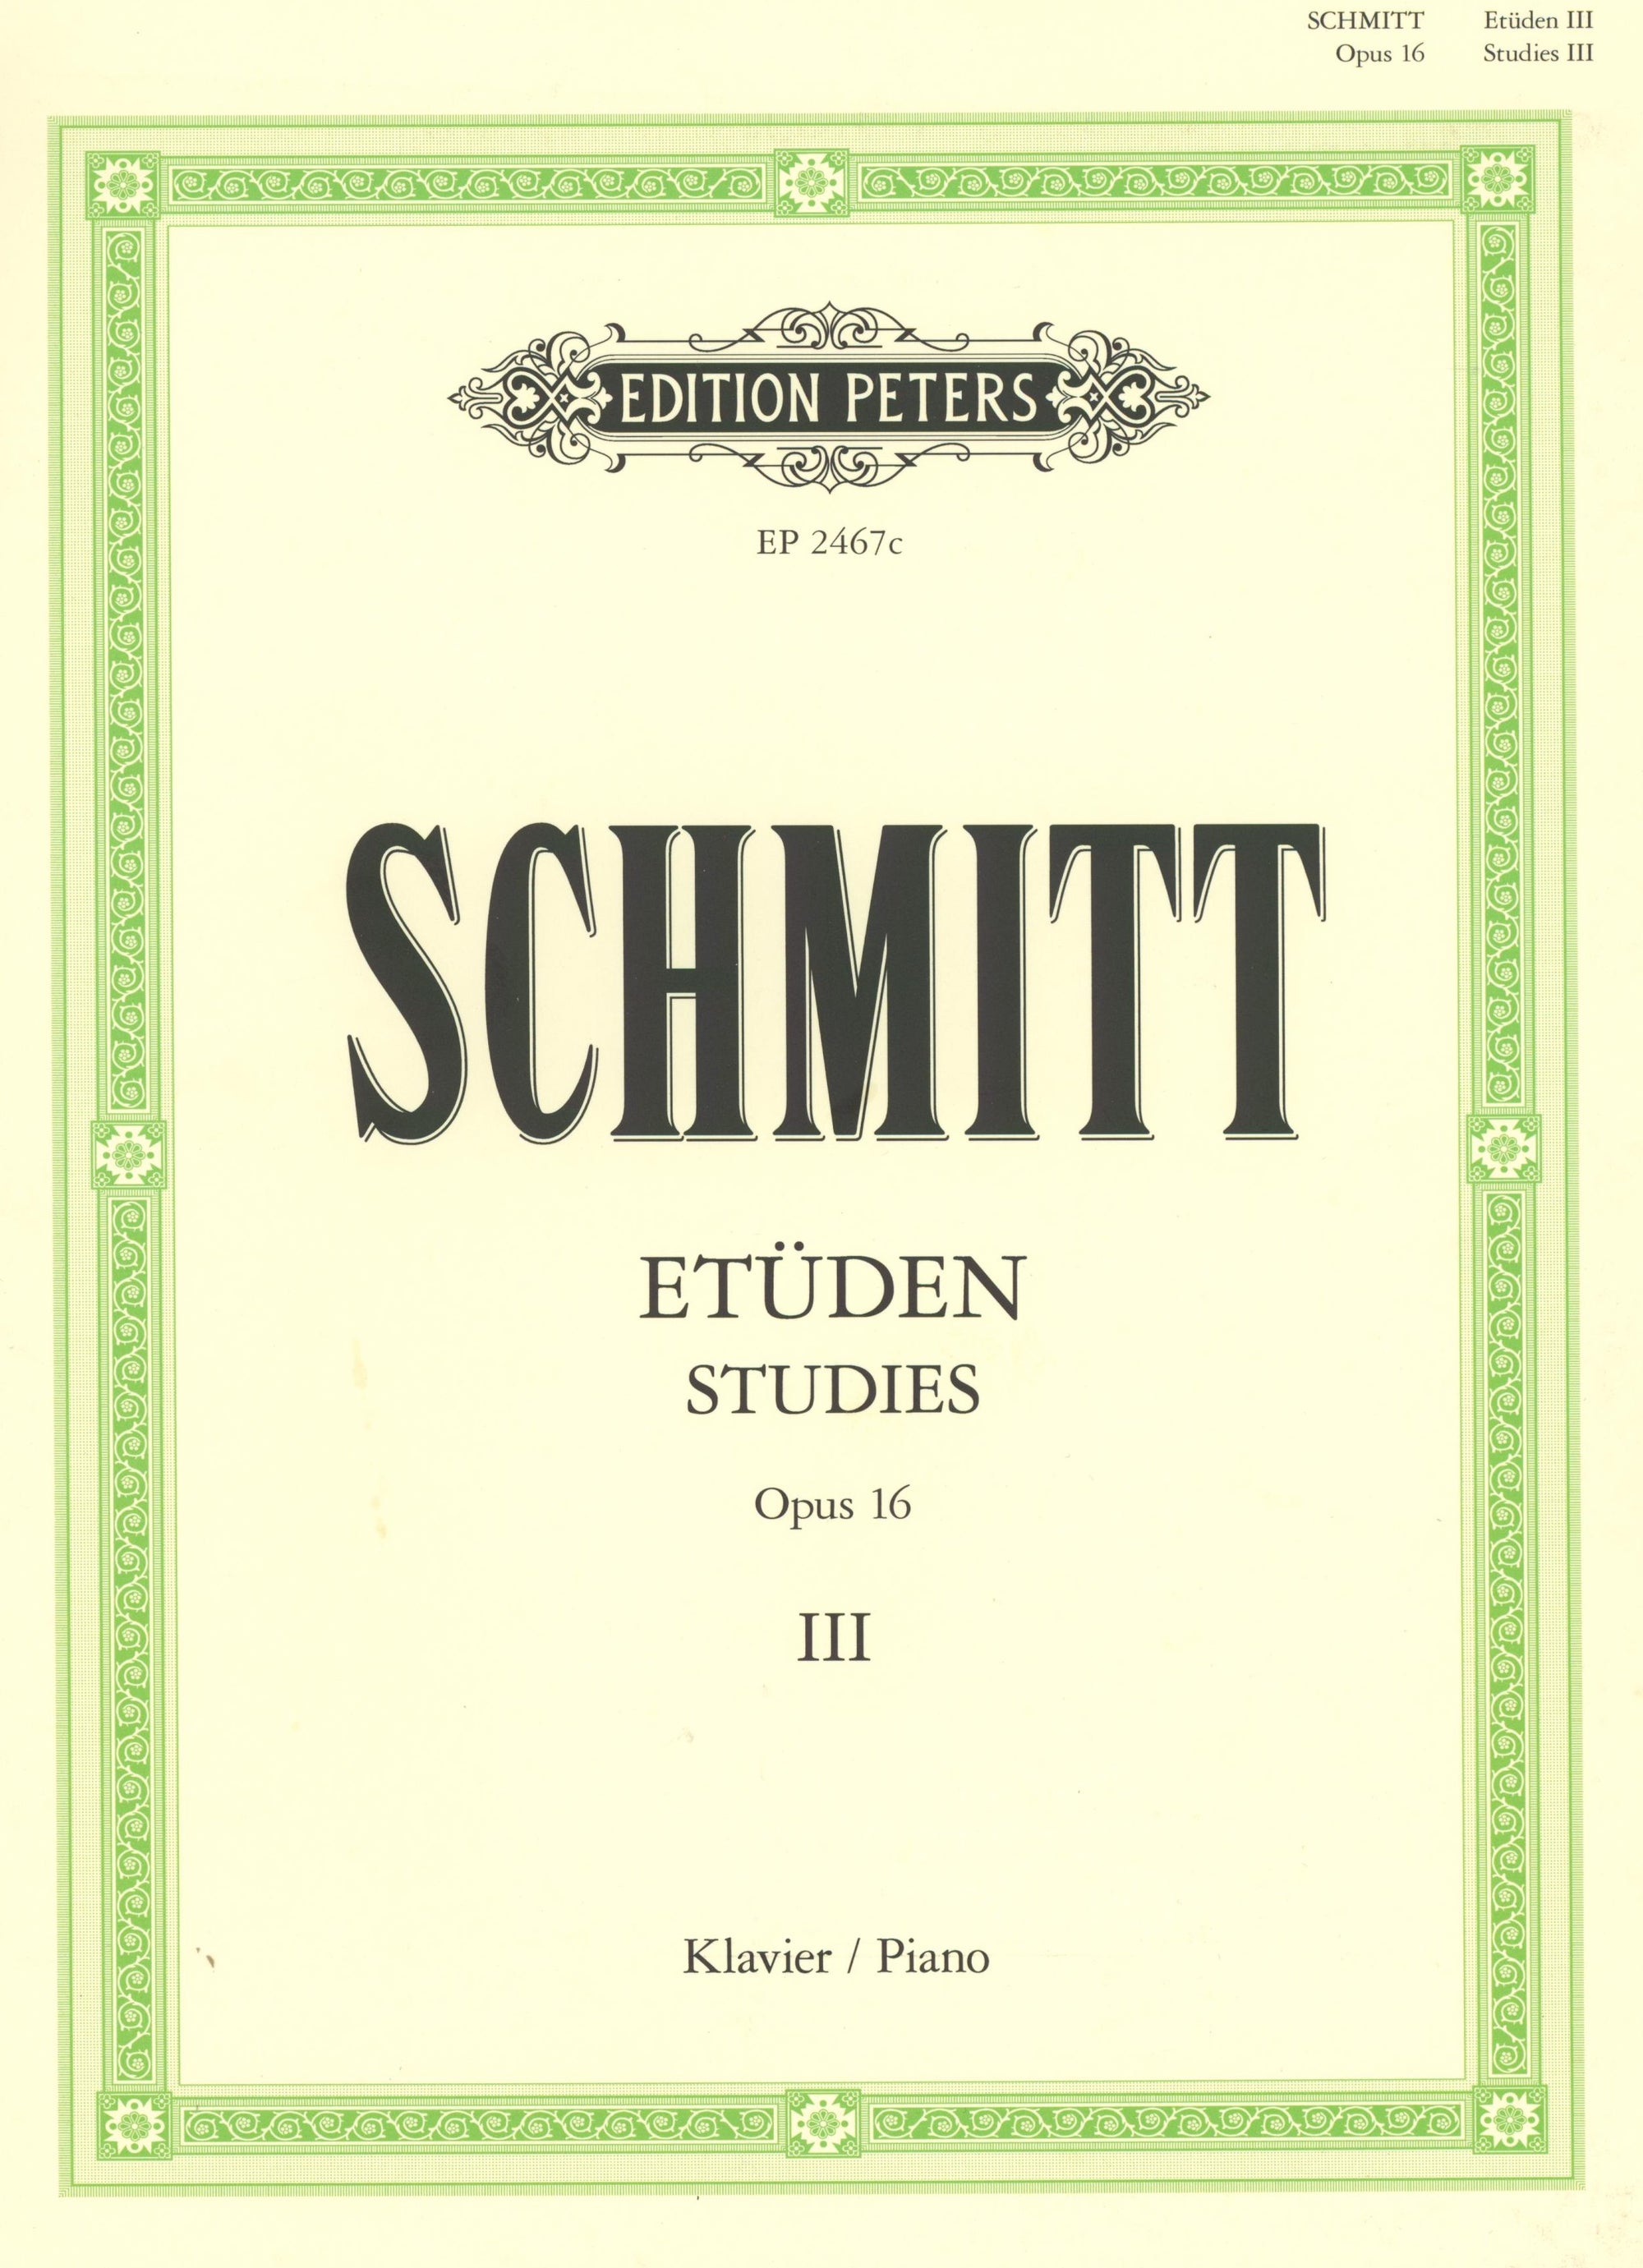 Schmitt: Preperatory Exercises, Op. 16 - Book 3